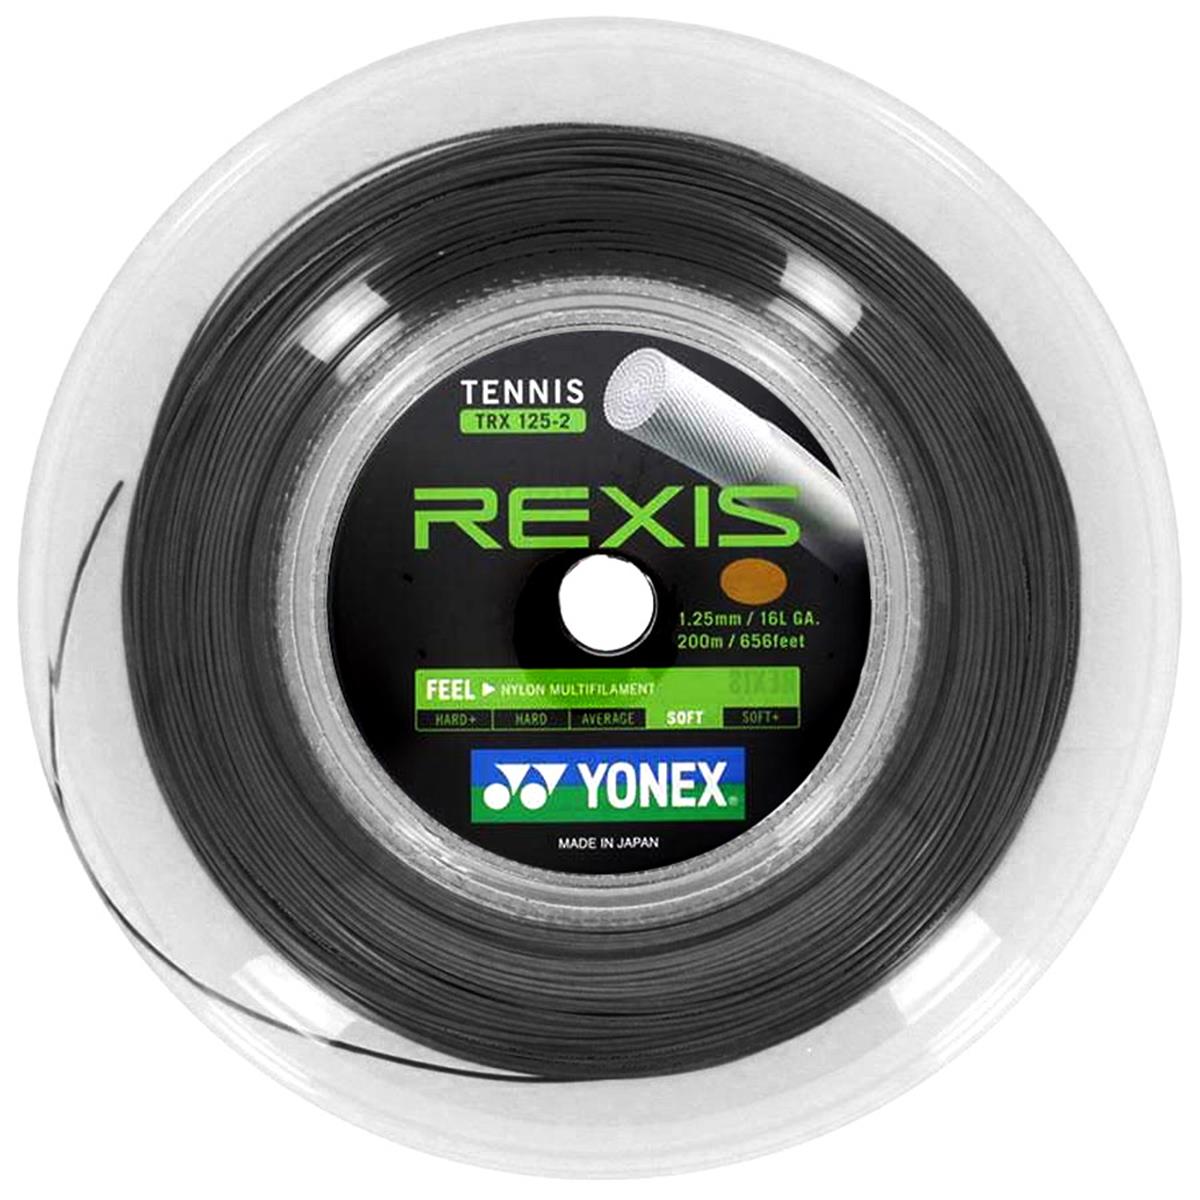 Yonex Rexis 1.25mm 200m Tennis String Black